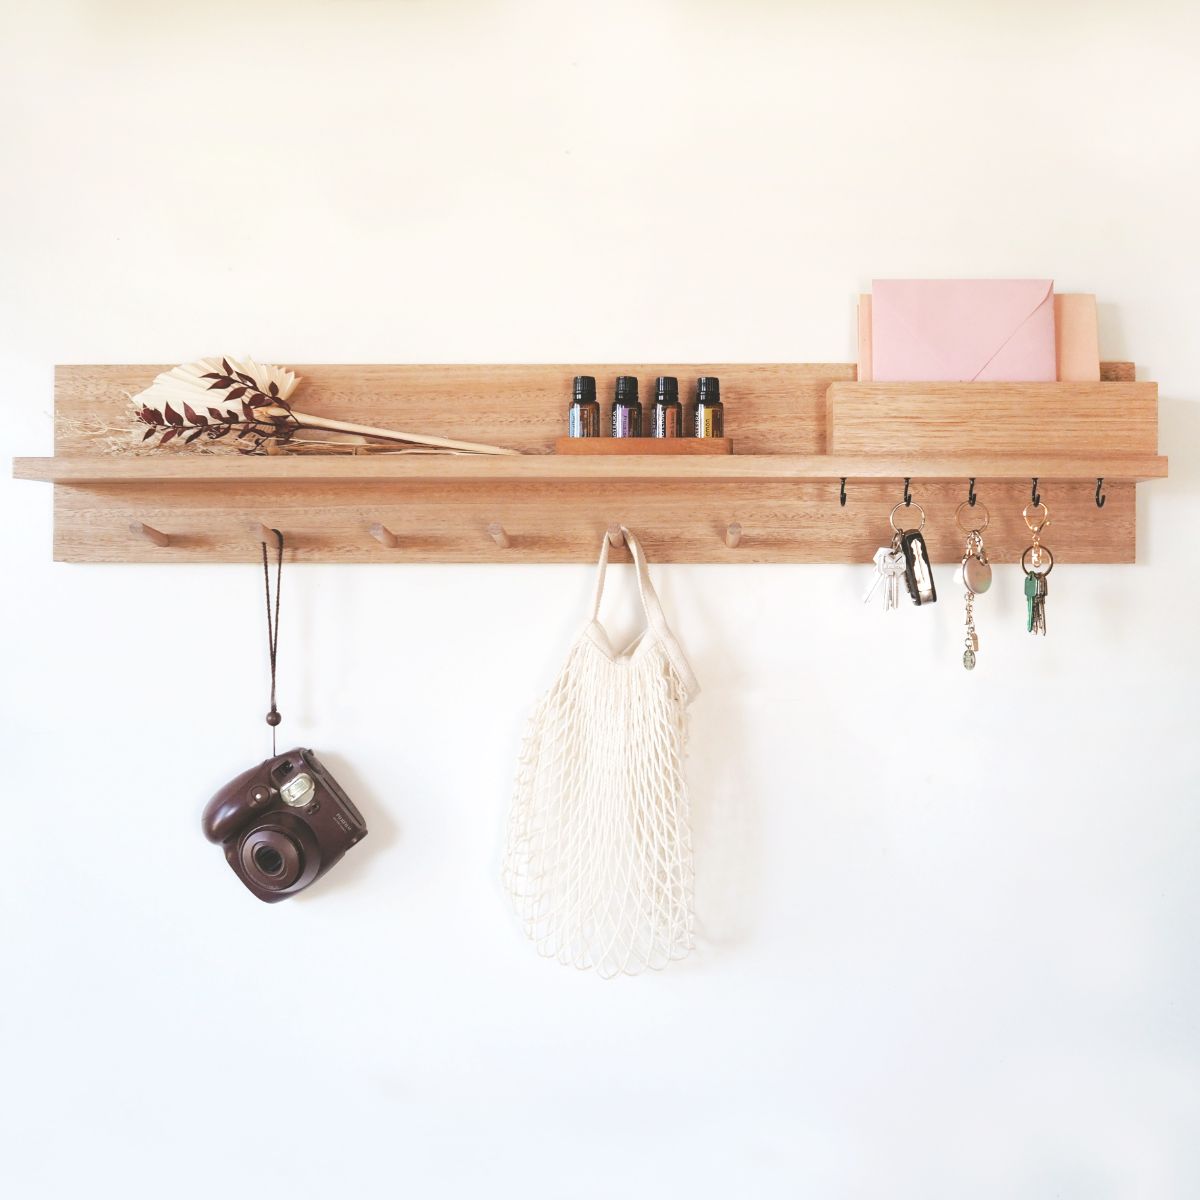 A 100cm Tasmanian Oak Entryway Shelf with mail holder, coat pegs and black hook key holders